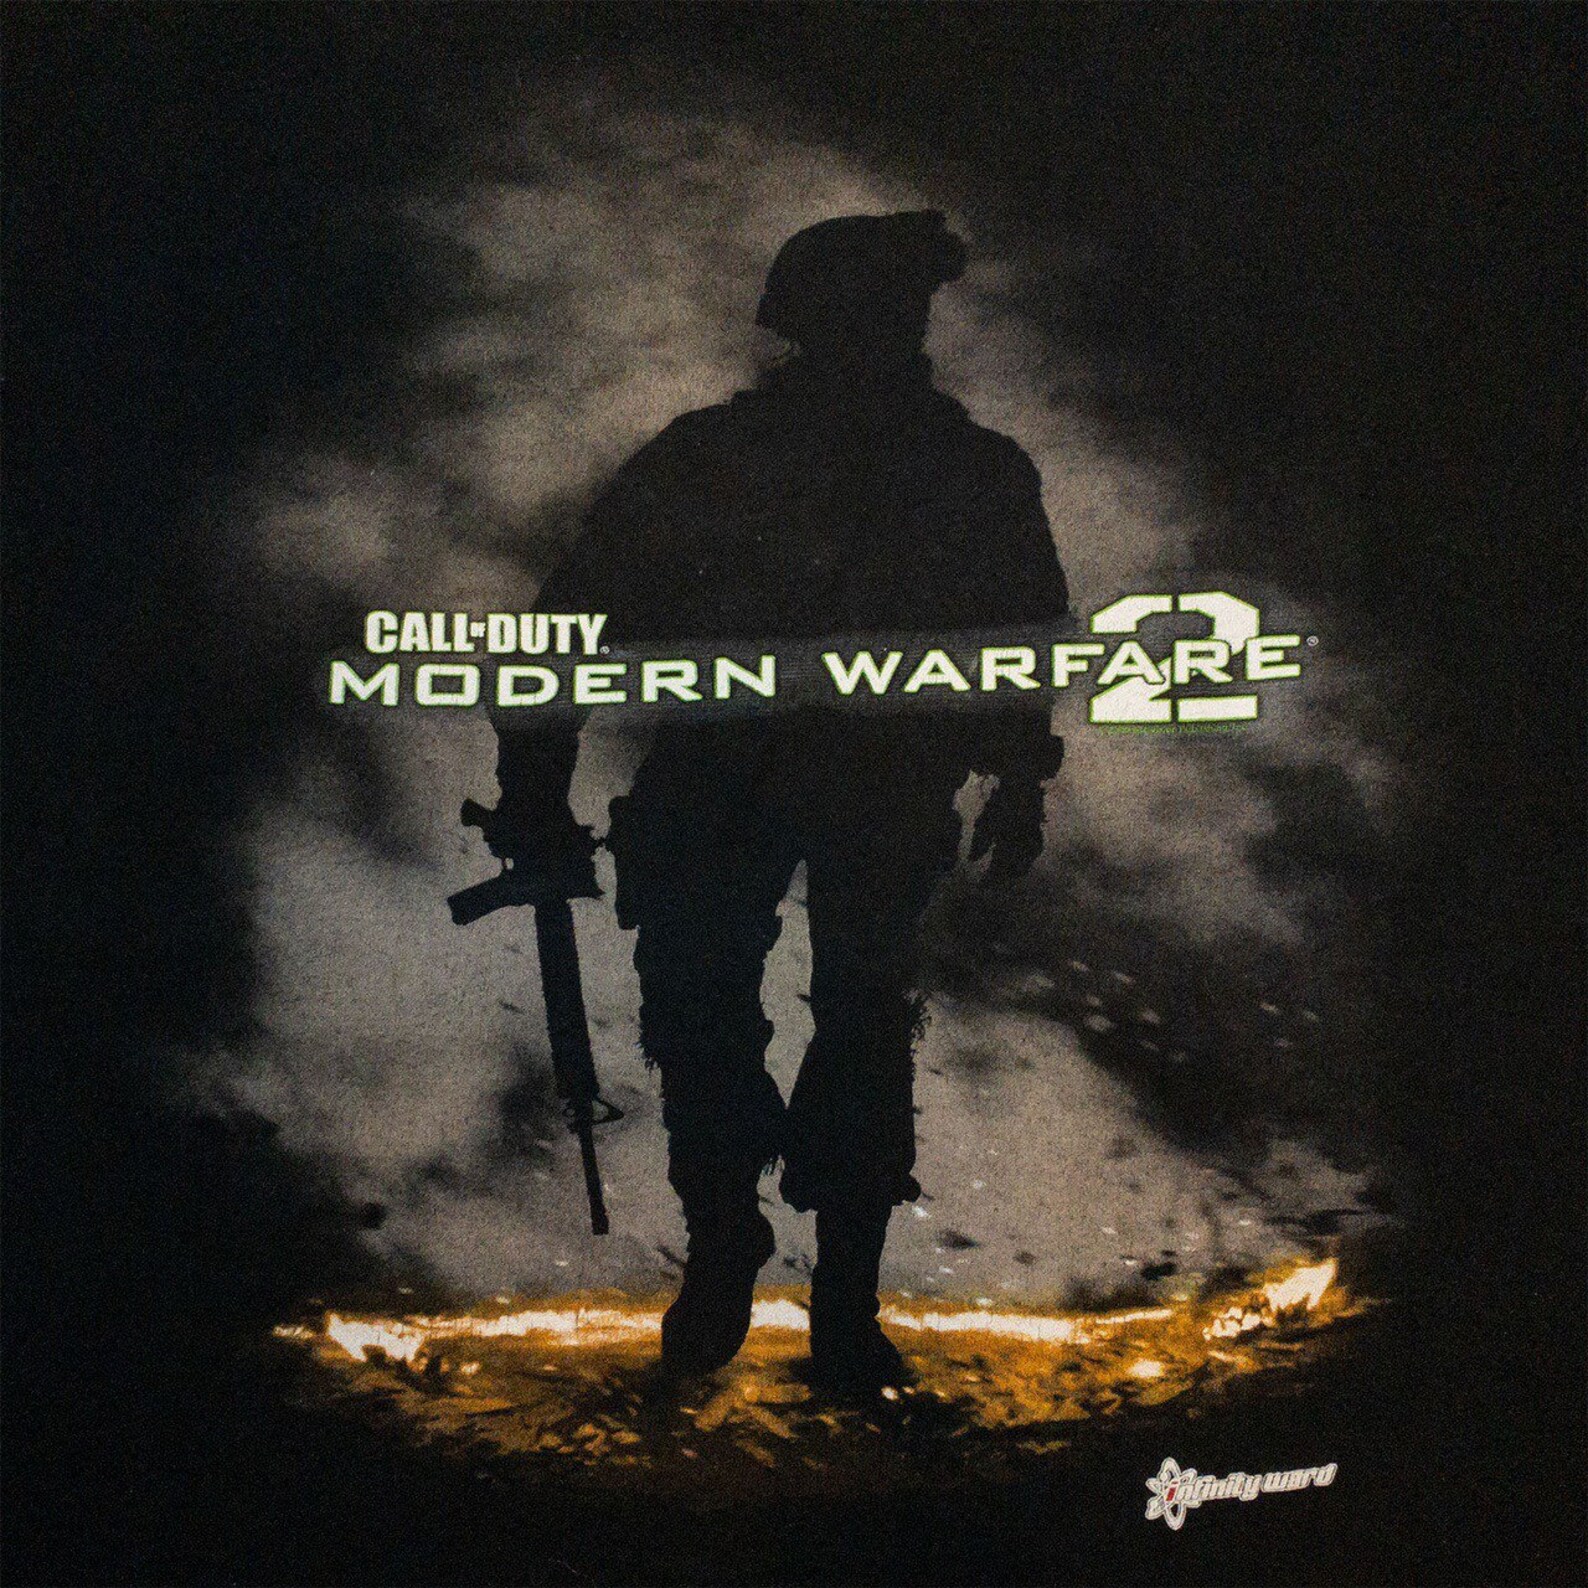 Call of Duty Modern Warfare 2 Soldier Silhouette Infinity Ward | Etsy